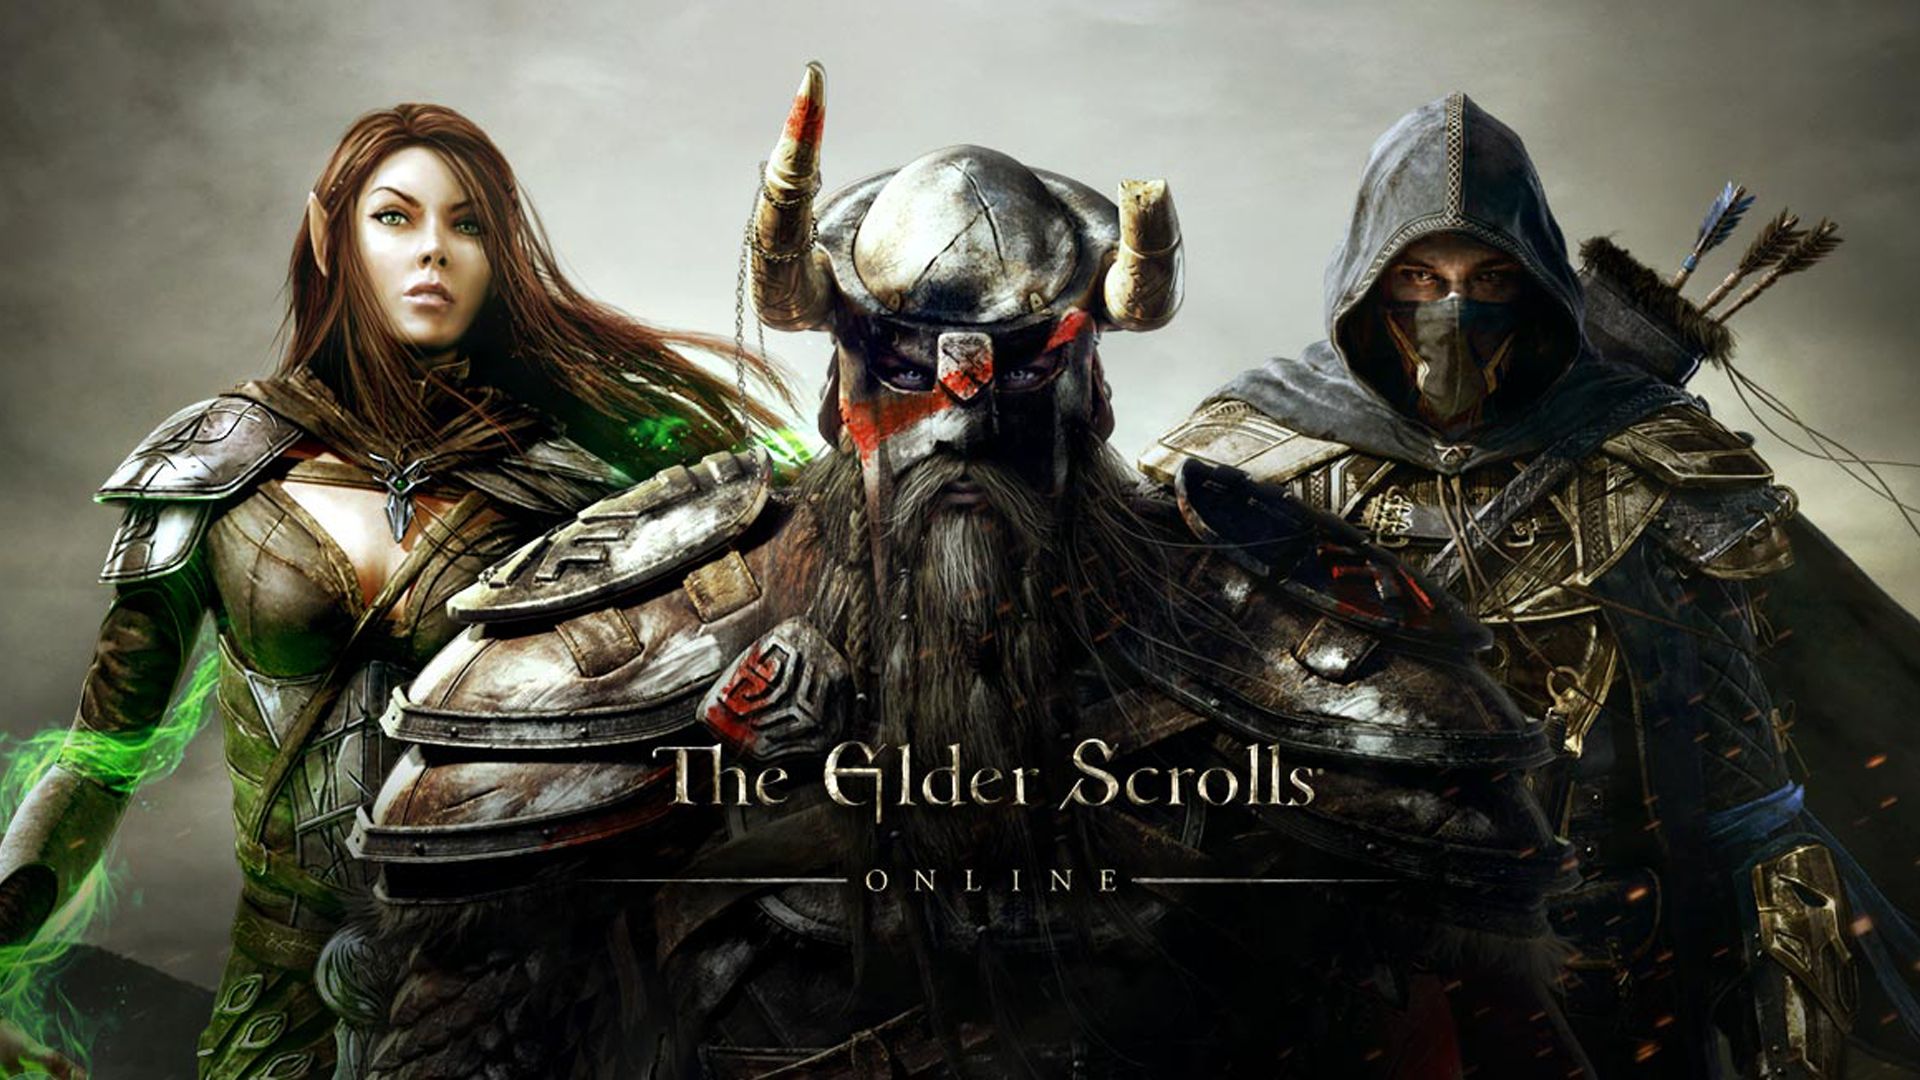 Play The Elder Scrolls Online For Free - The Elder Scrolls Online